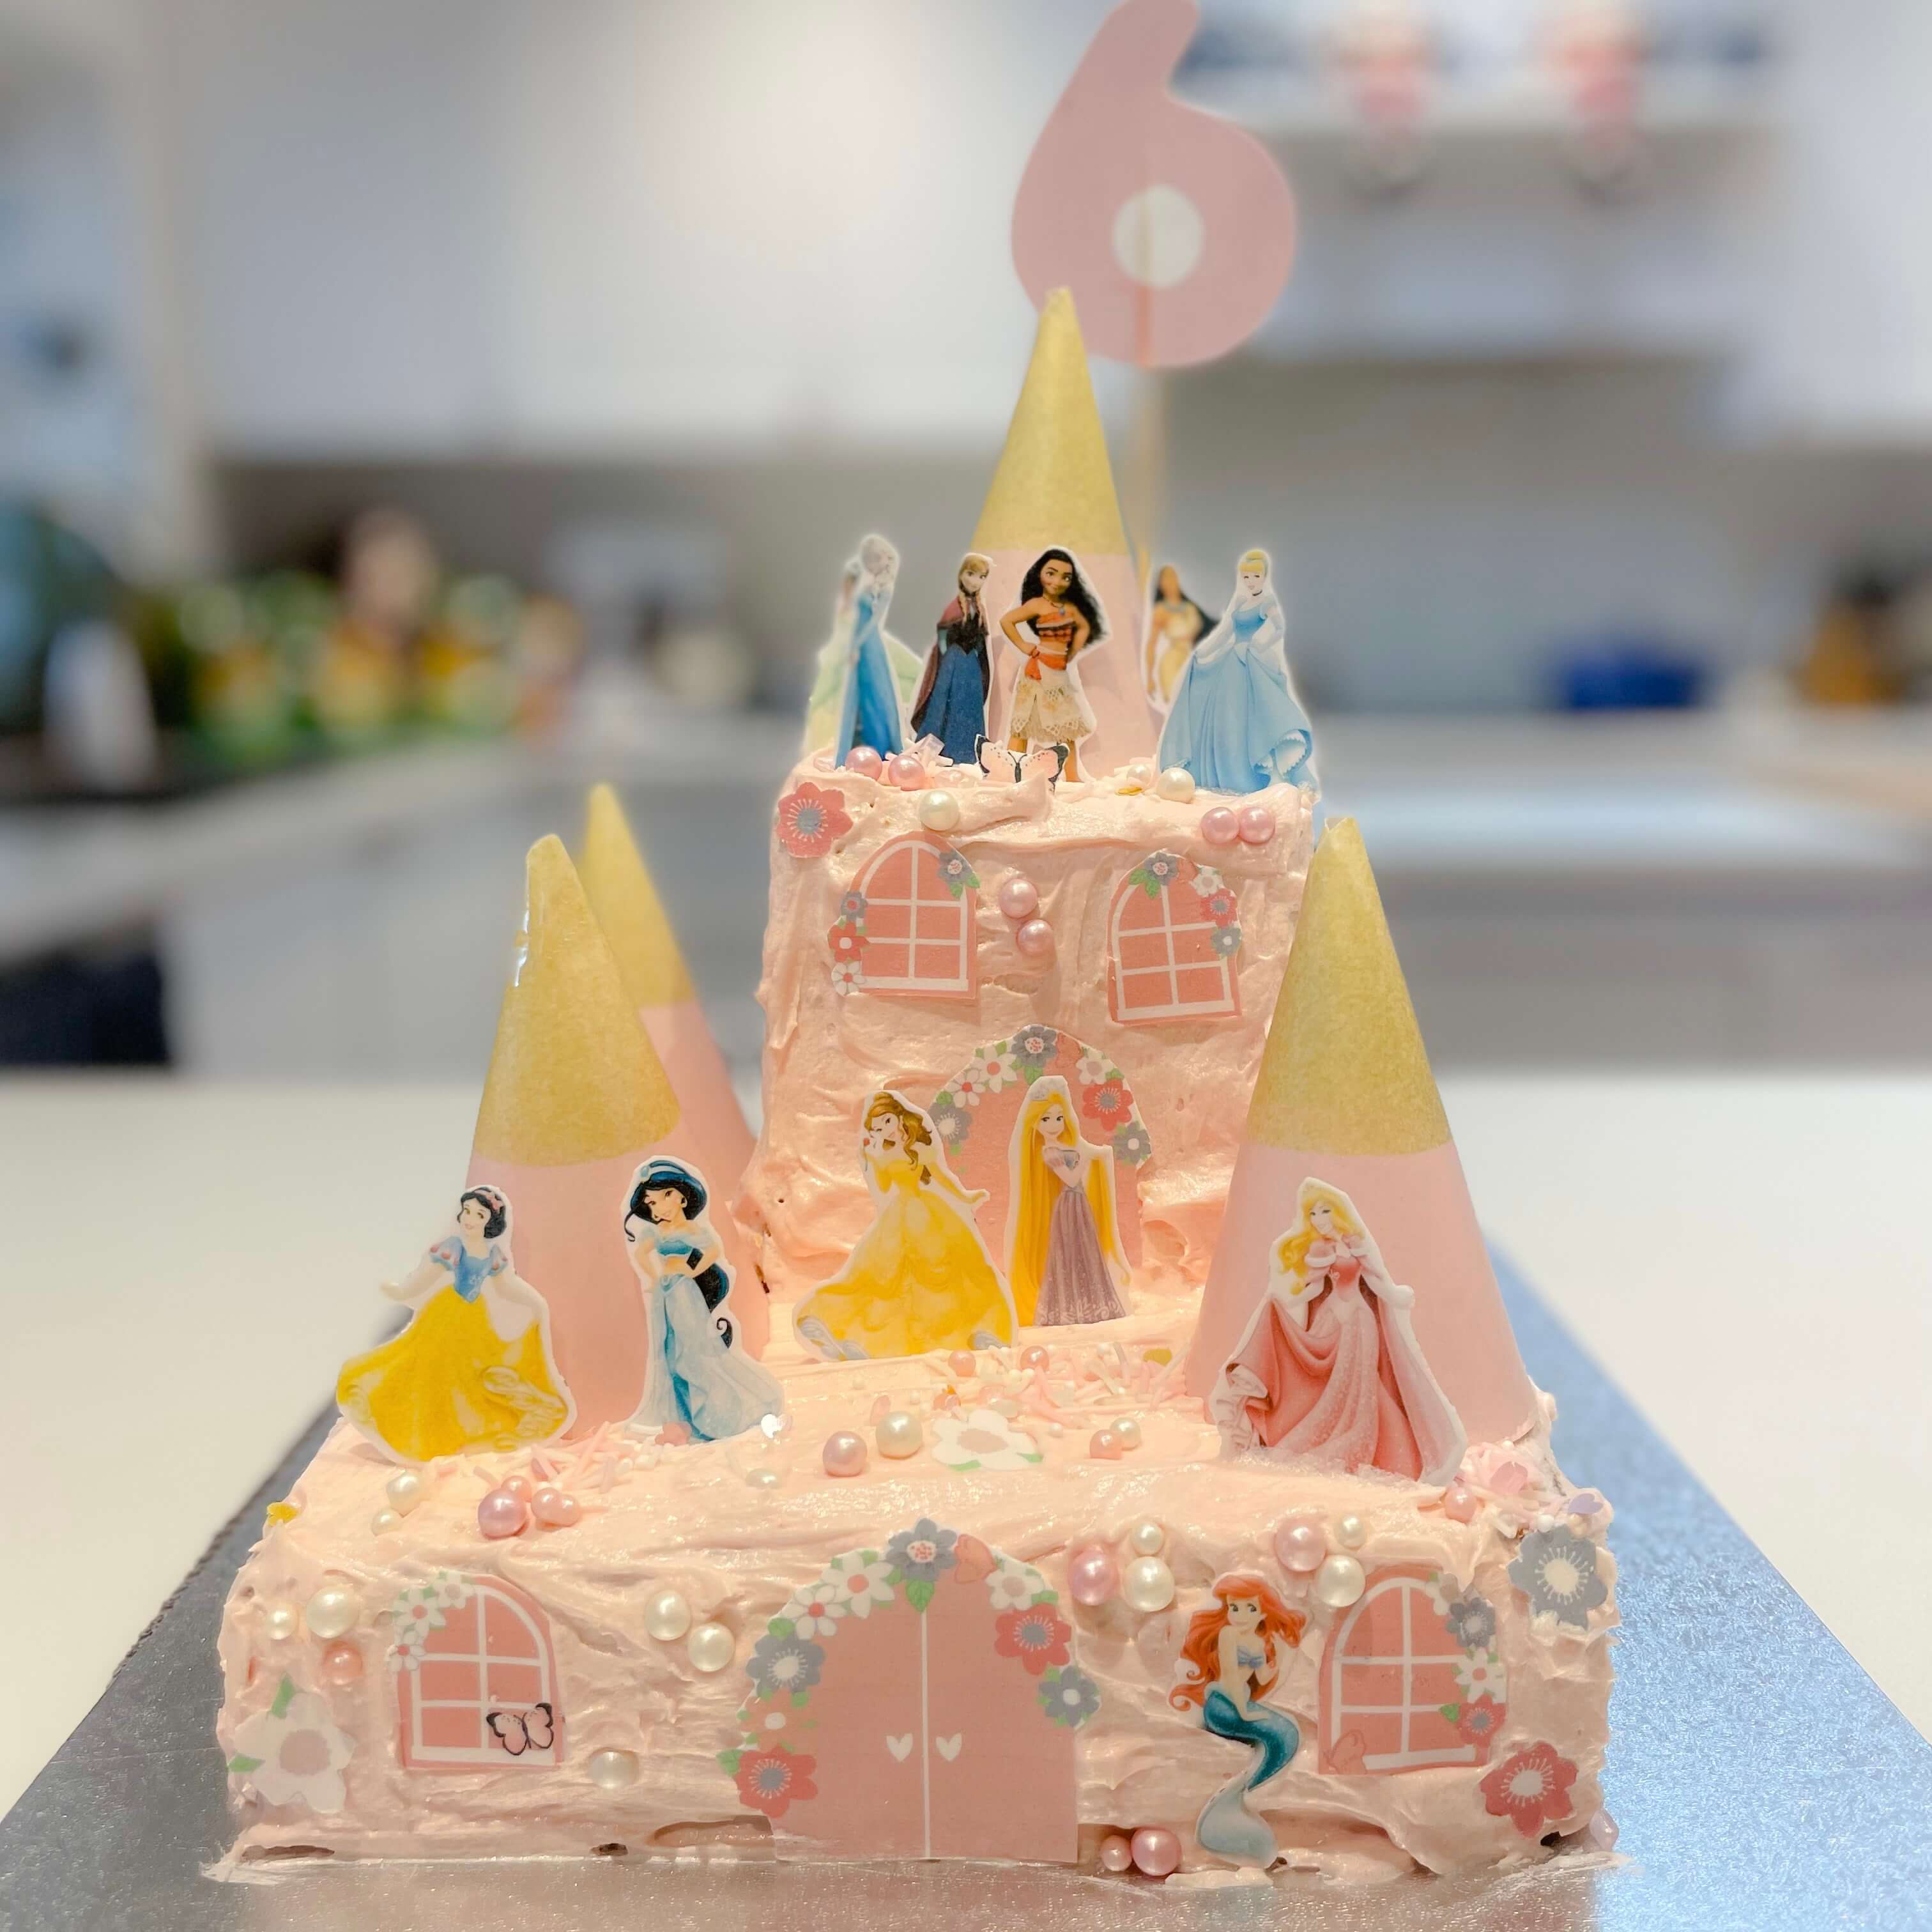 descendants cake | A gorgeous 3 tier birthday cake based on … | Flickr